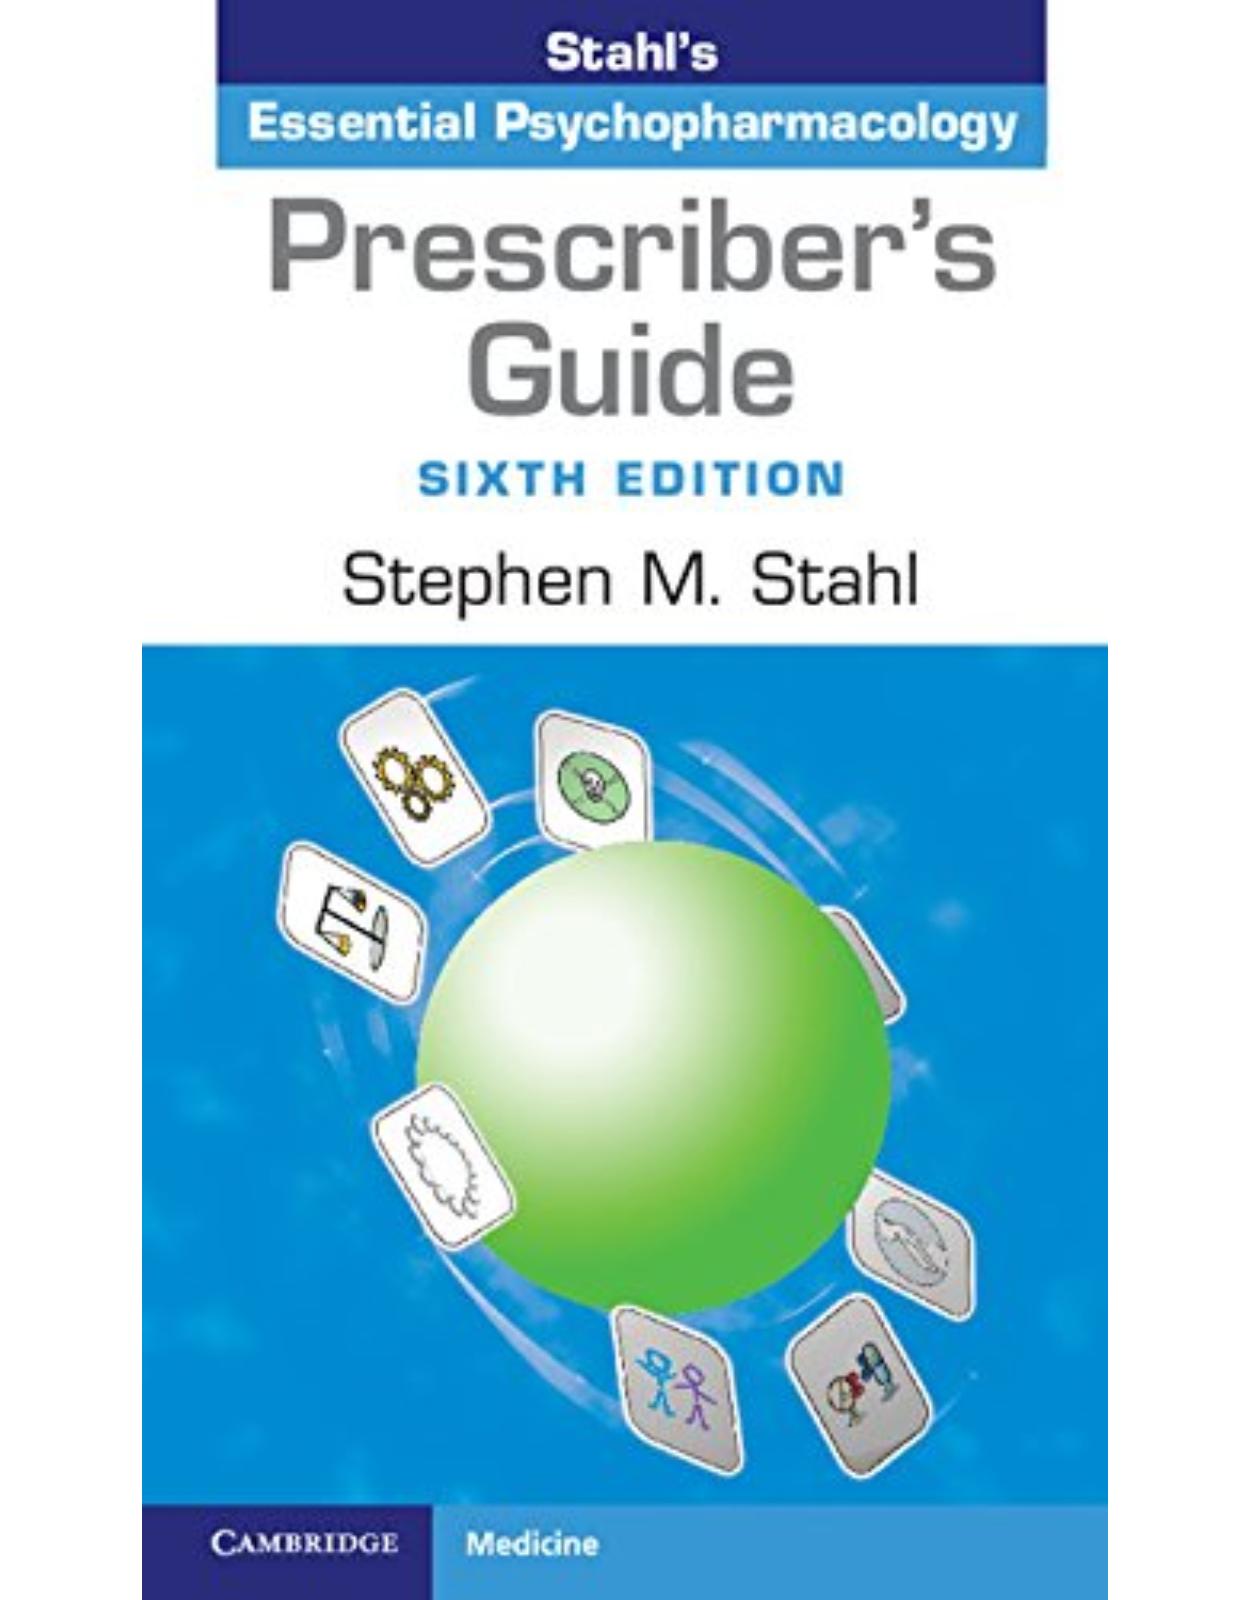 Prescriber’s Guide: Stahl’s Essential Psychopharmacology, Seventh Edition